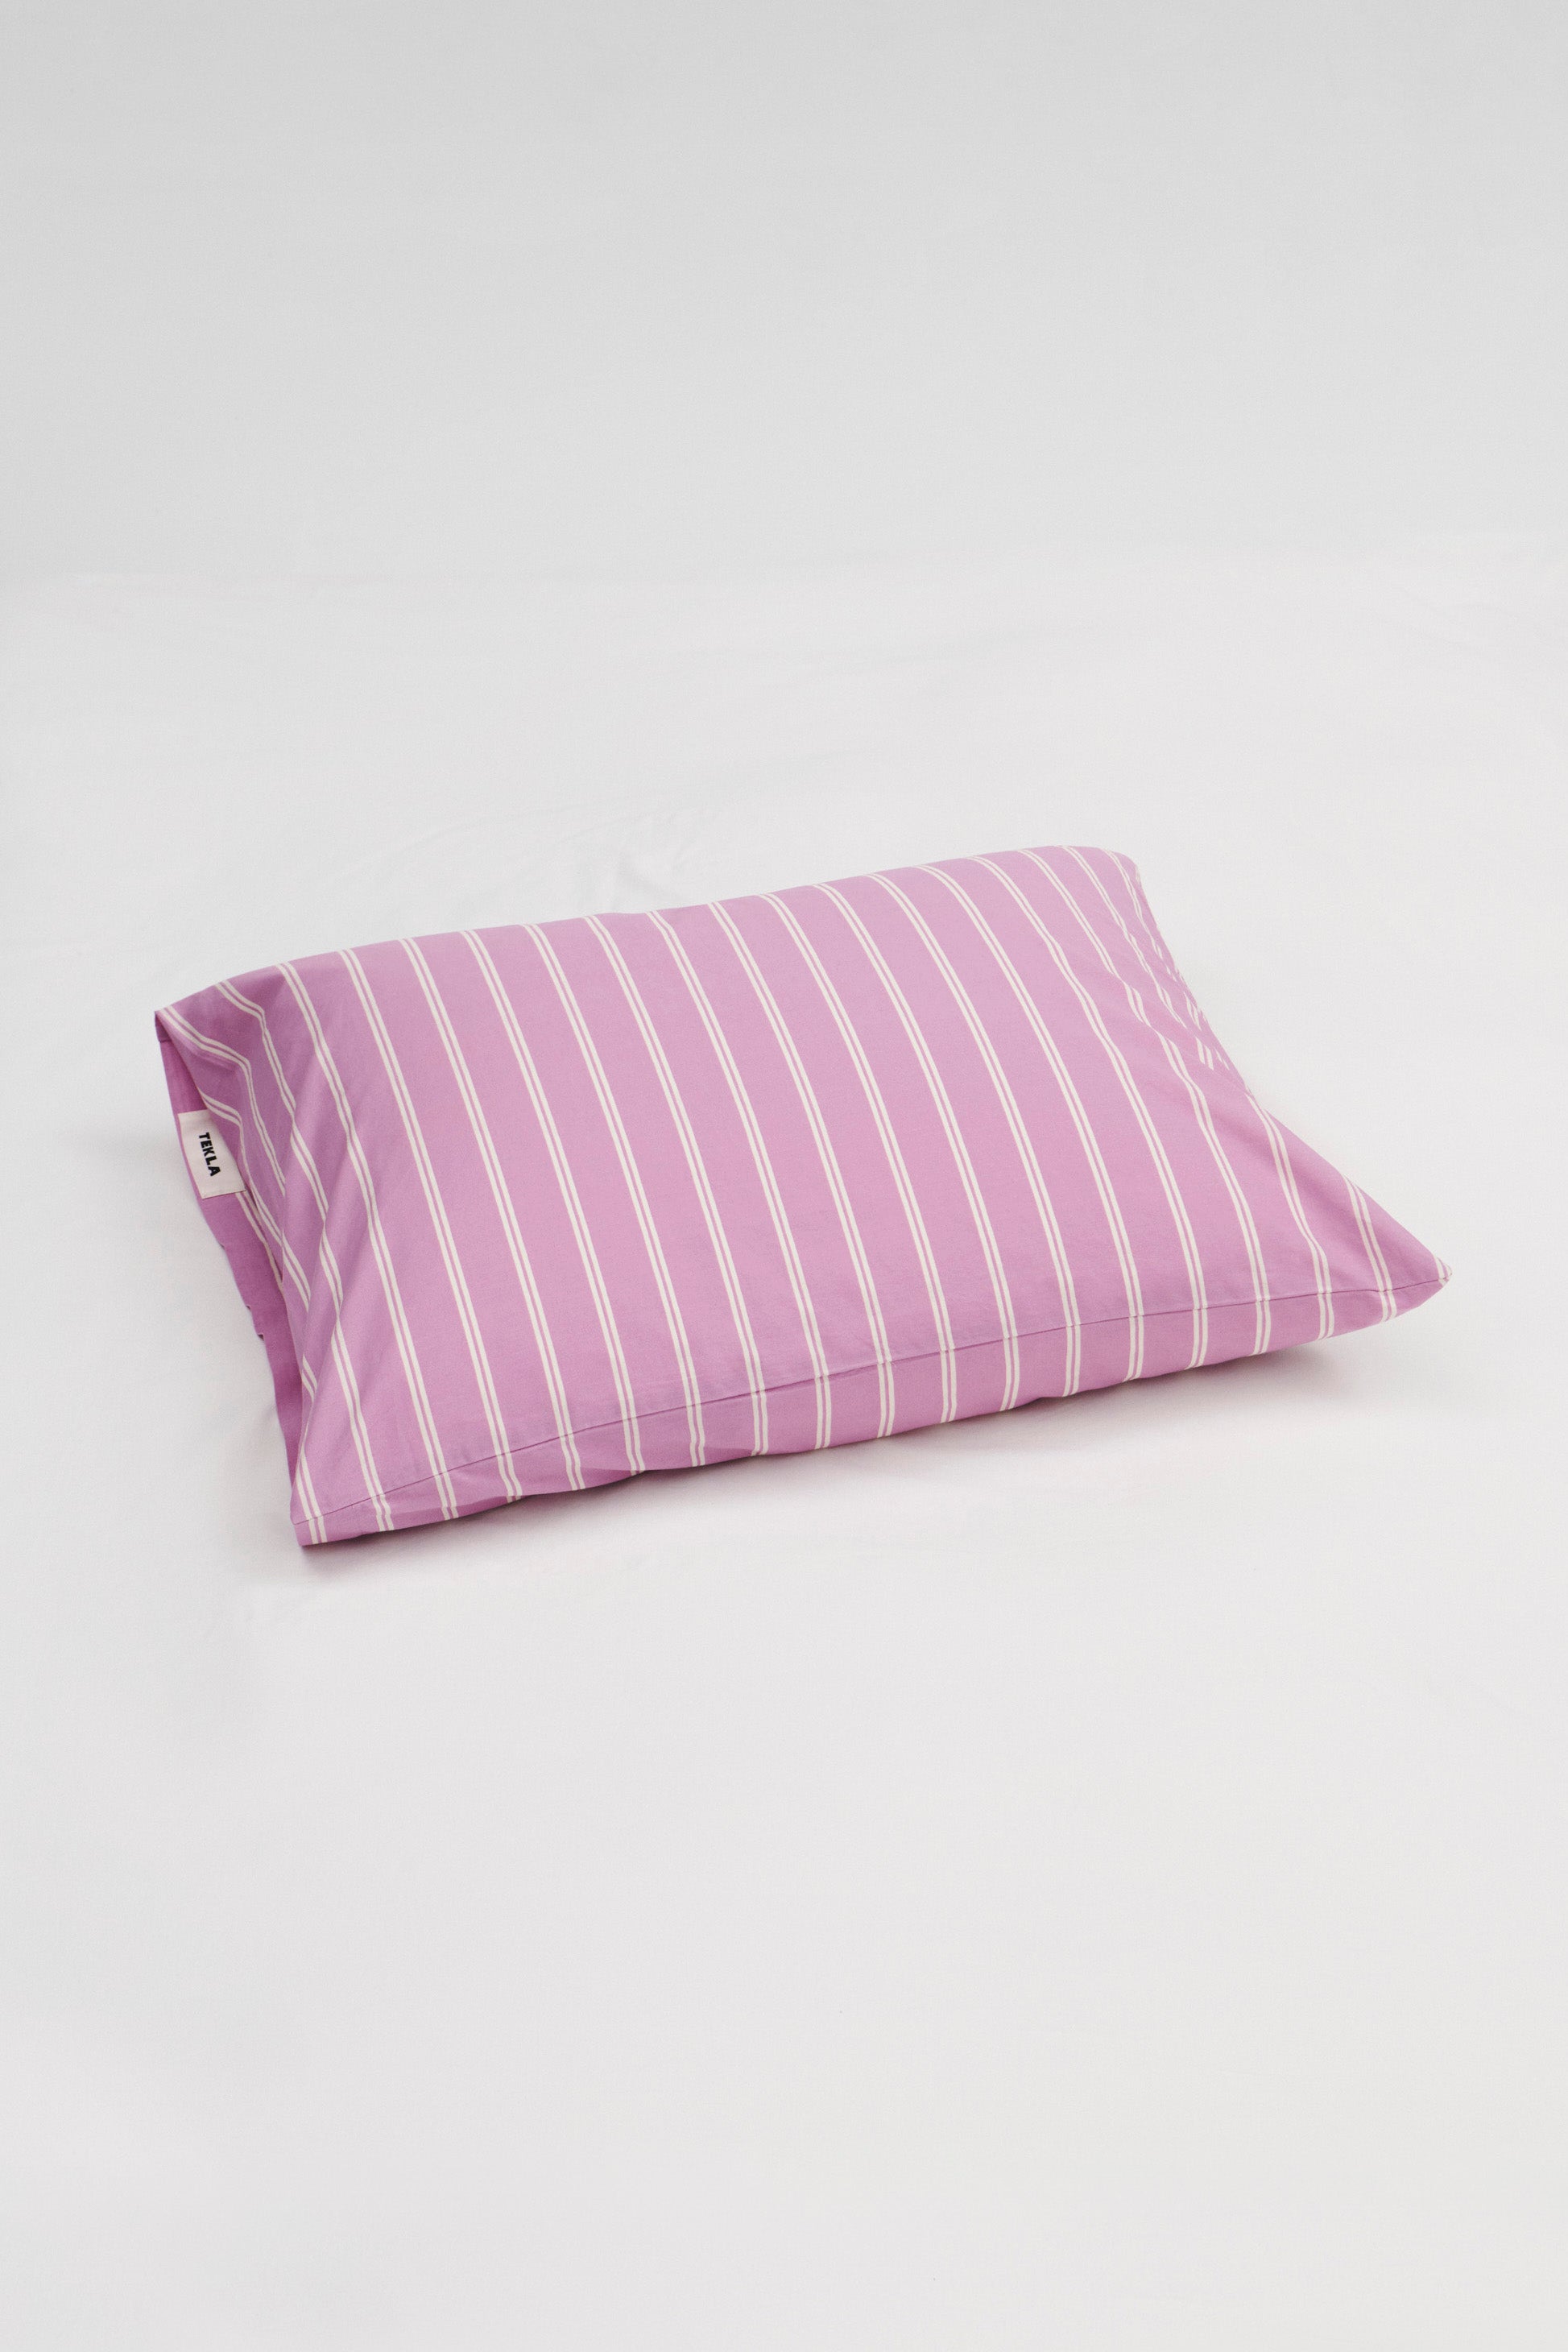 Percale Pillowcase Mallow Pink Stripes